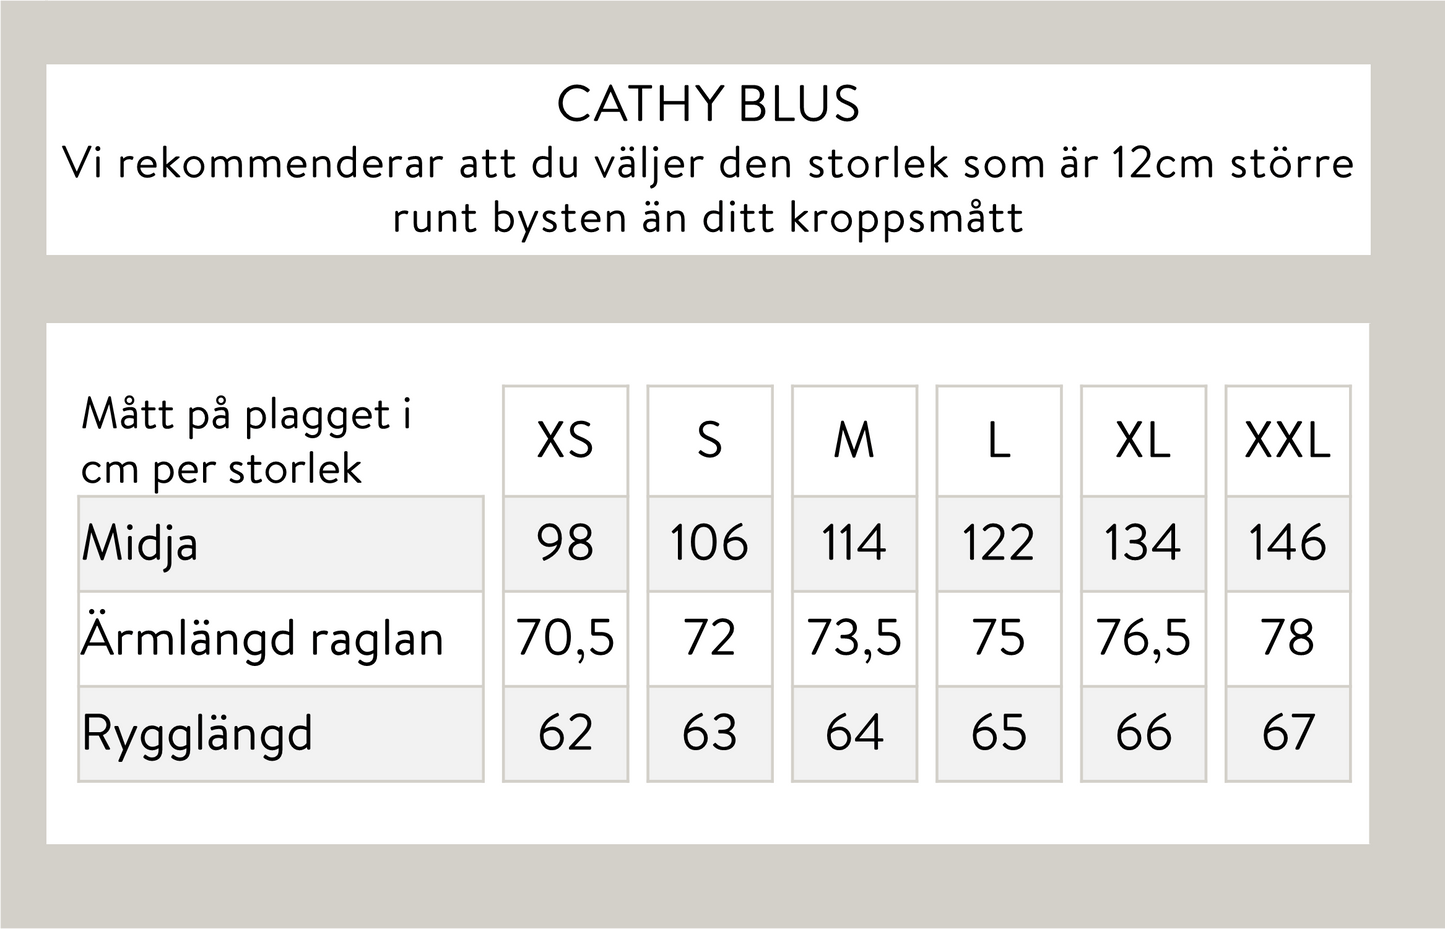 Cathy blus - Blå